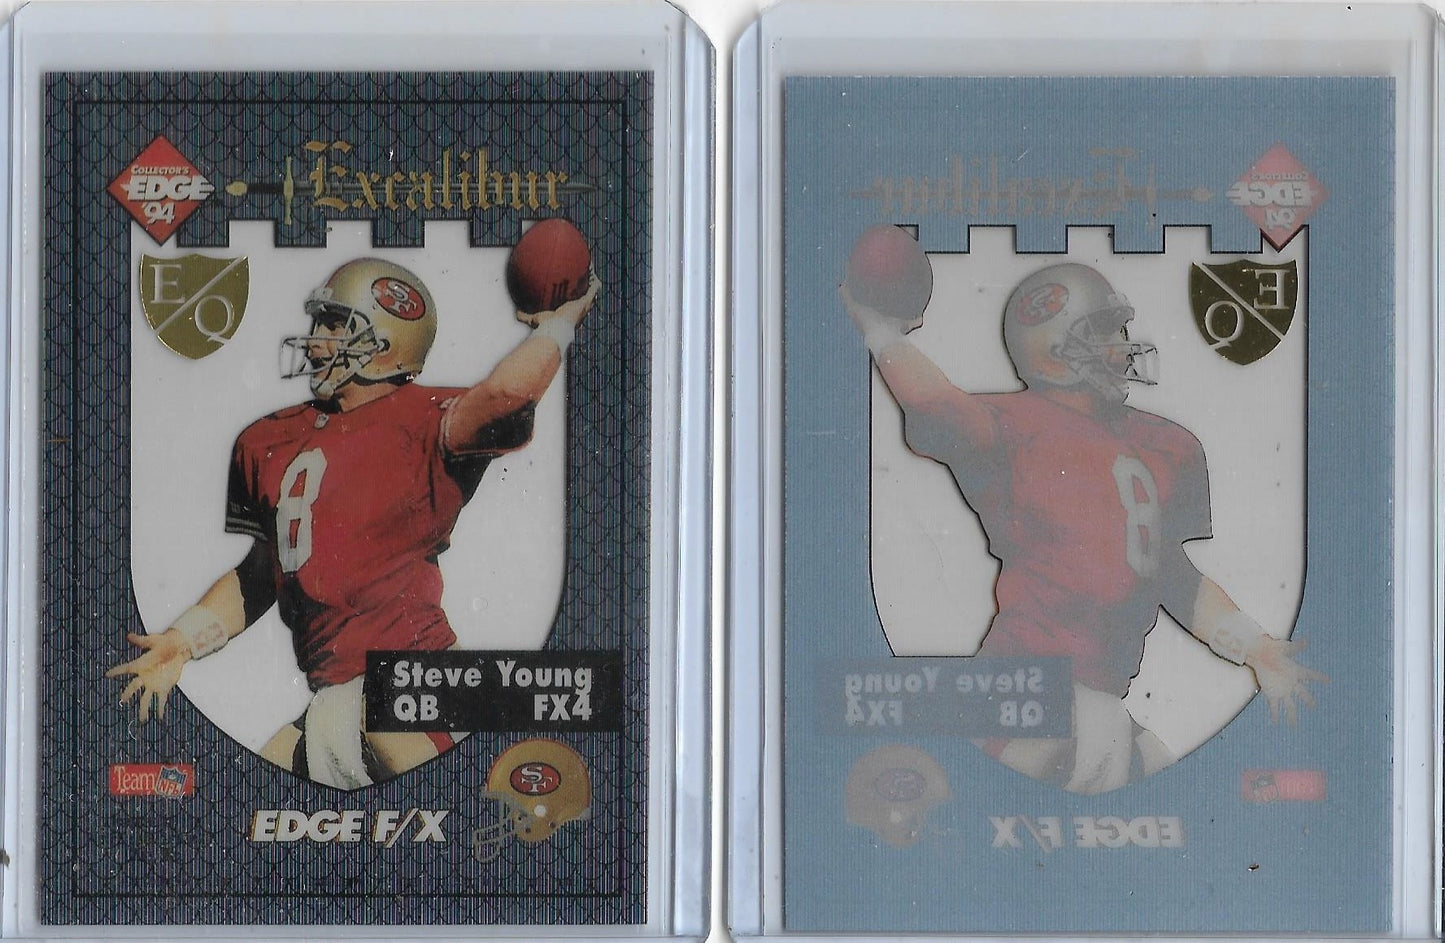 1994 COLLECTORS EDGE EXCALIBUR FX  INSERT CARD FX-4 STEVE YOUNG SAN FRANCISCO 49ERS